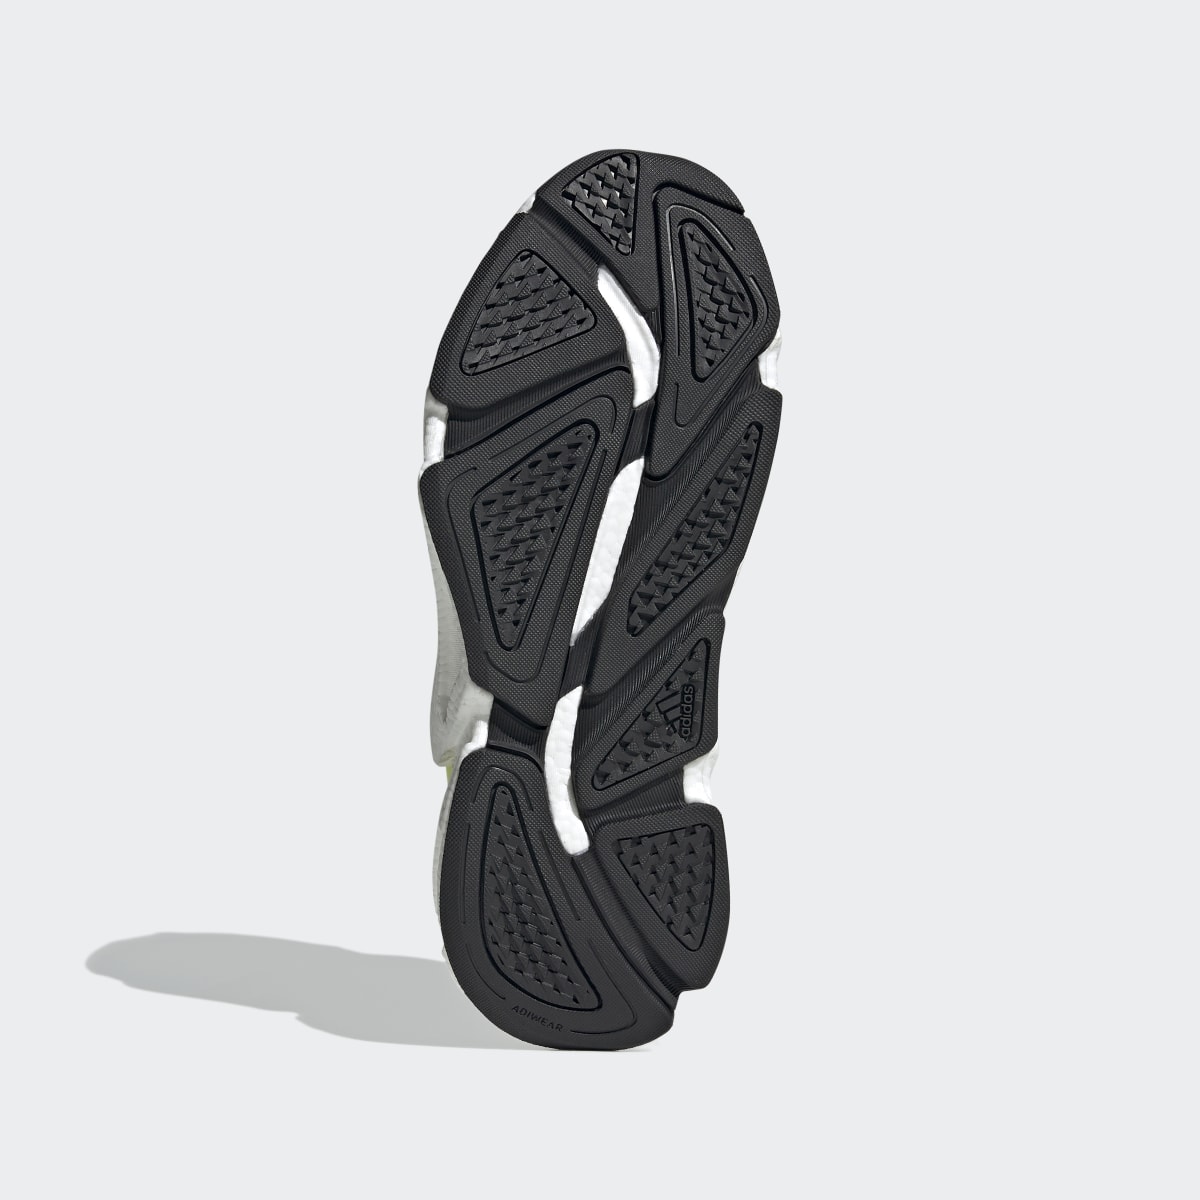 Adidas Scarpe Karlie Kloss X9000. 4